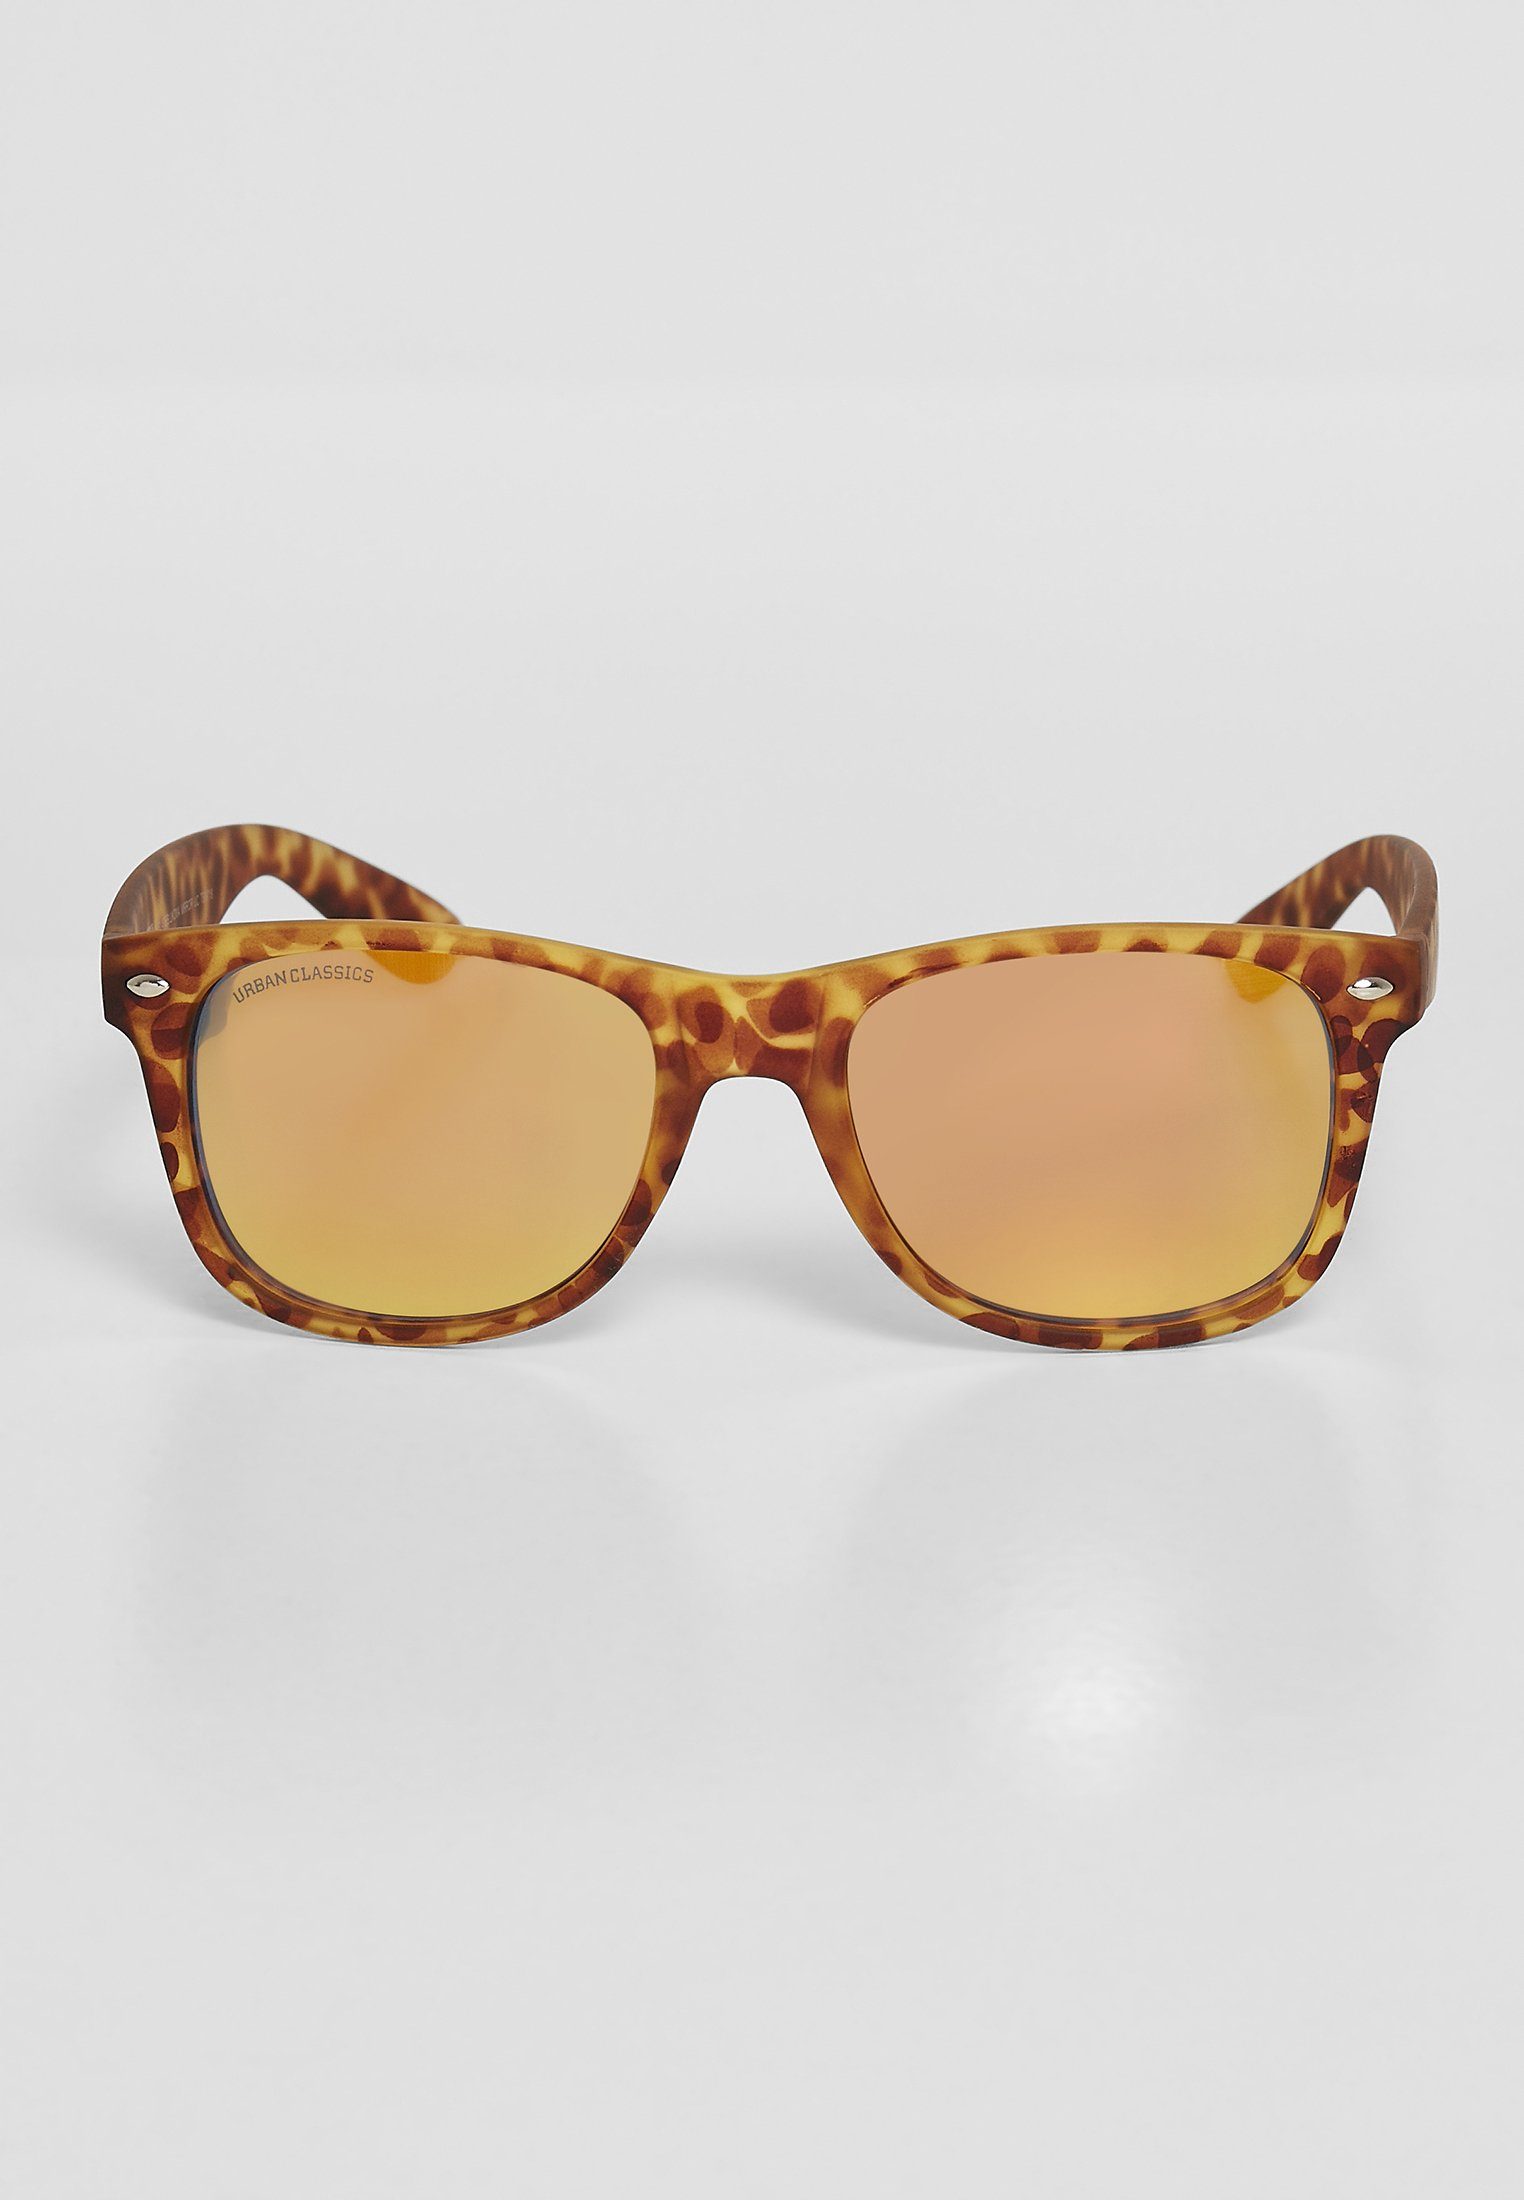 UC brown Accessoires URBAN Mirror Sonnenbrille Sunglasses leo/orange CLASSICS Likoma